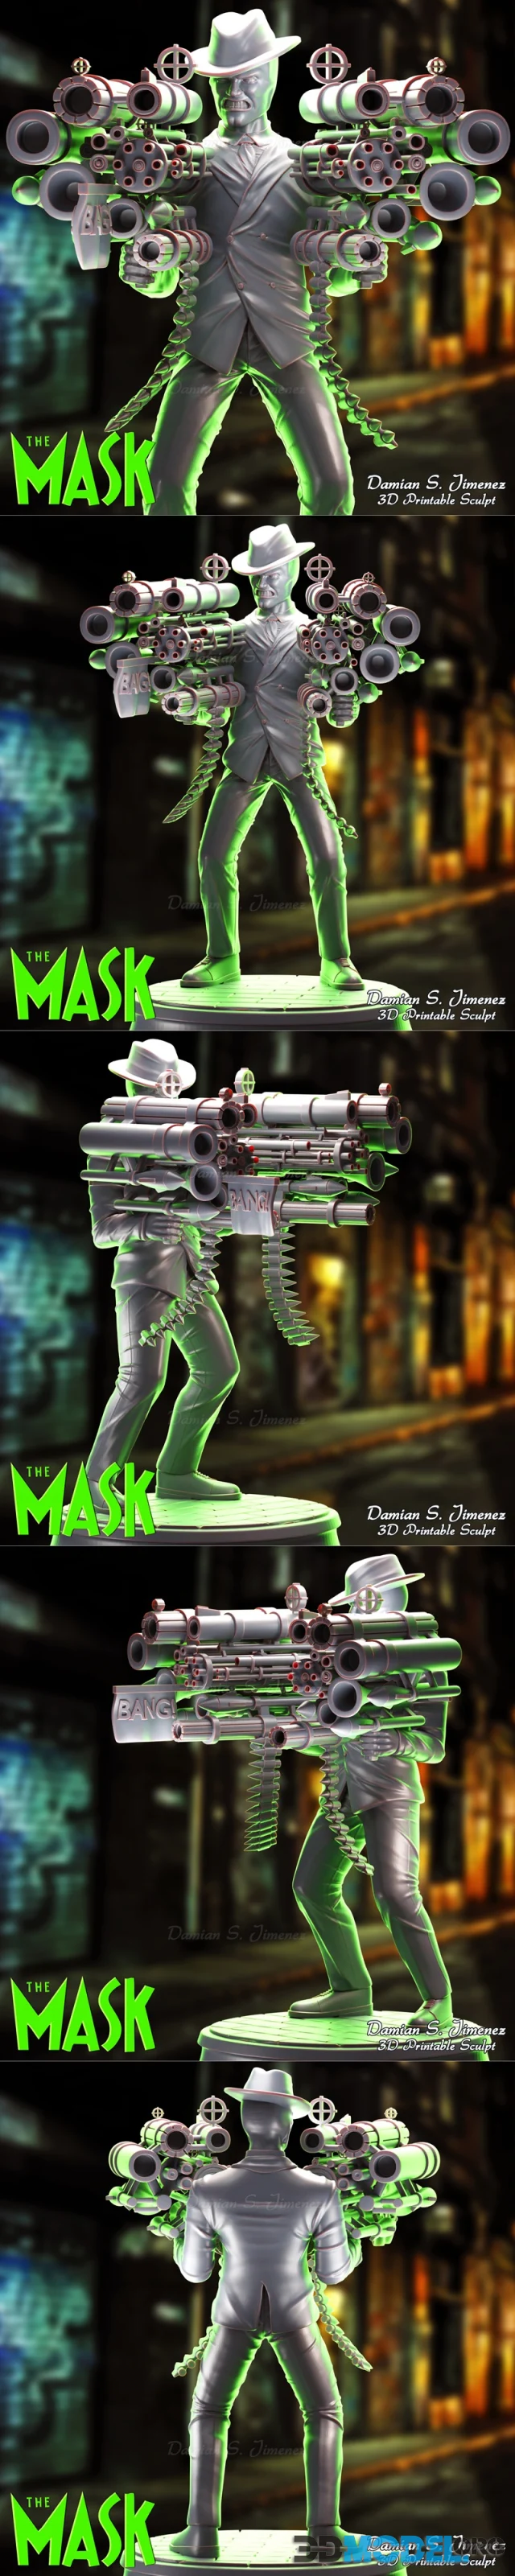 The Mask by Damian S.Jimenez – Printable